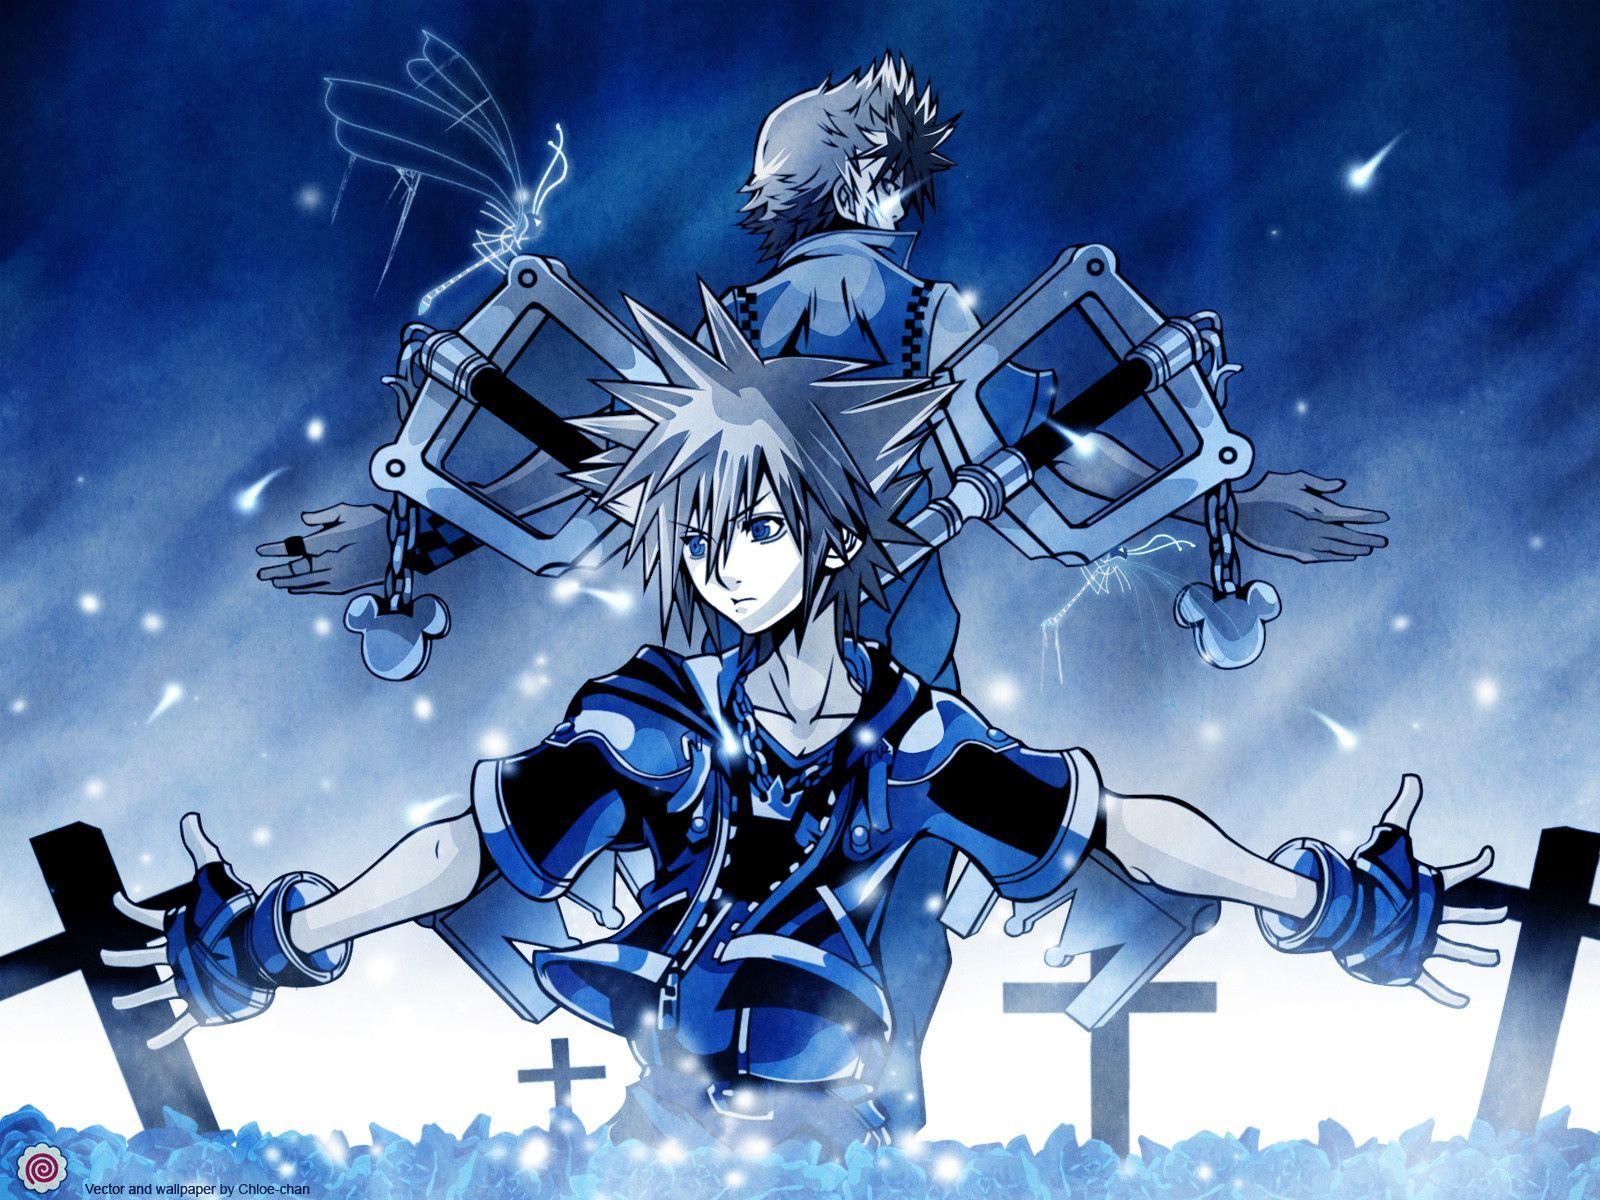 Kingdom Hearts Background Wallpaper 1024x768PX Wallpaper Kingdom